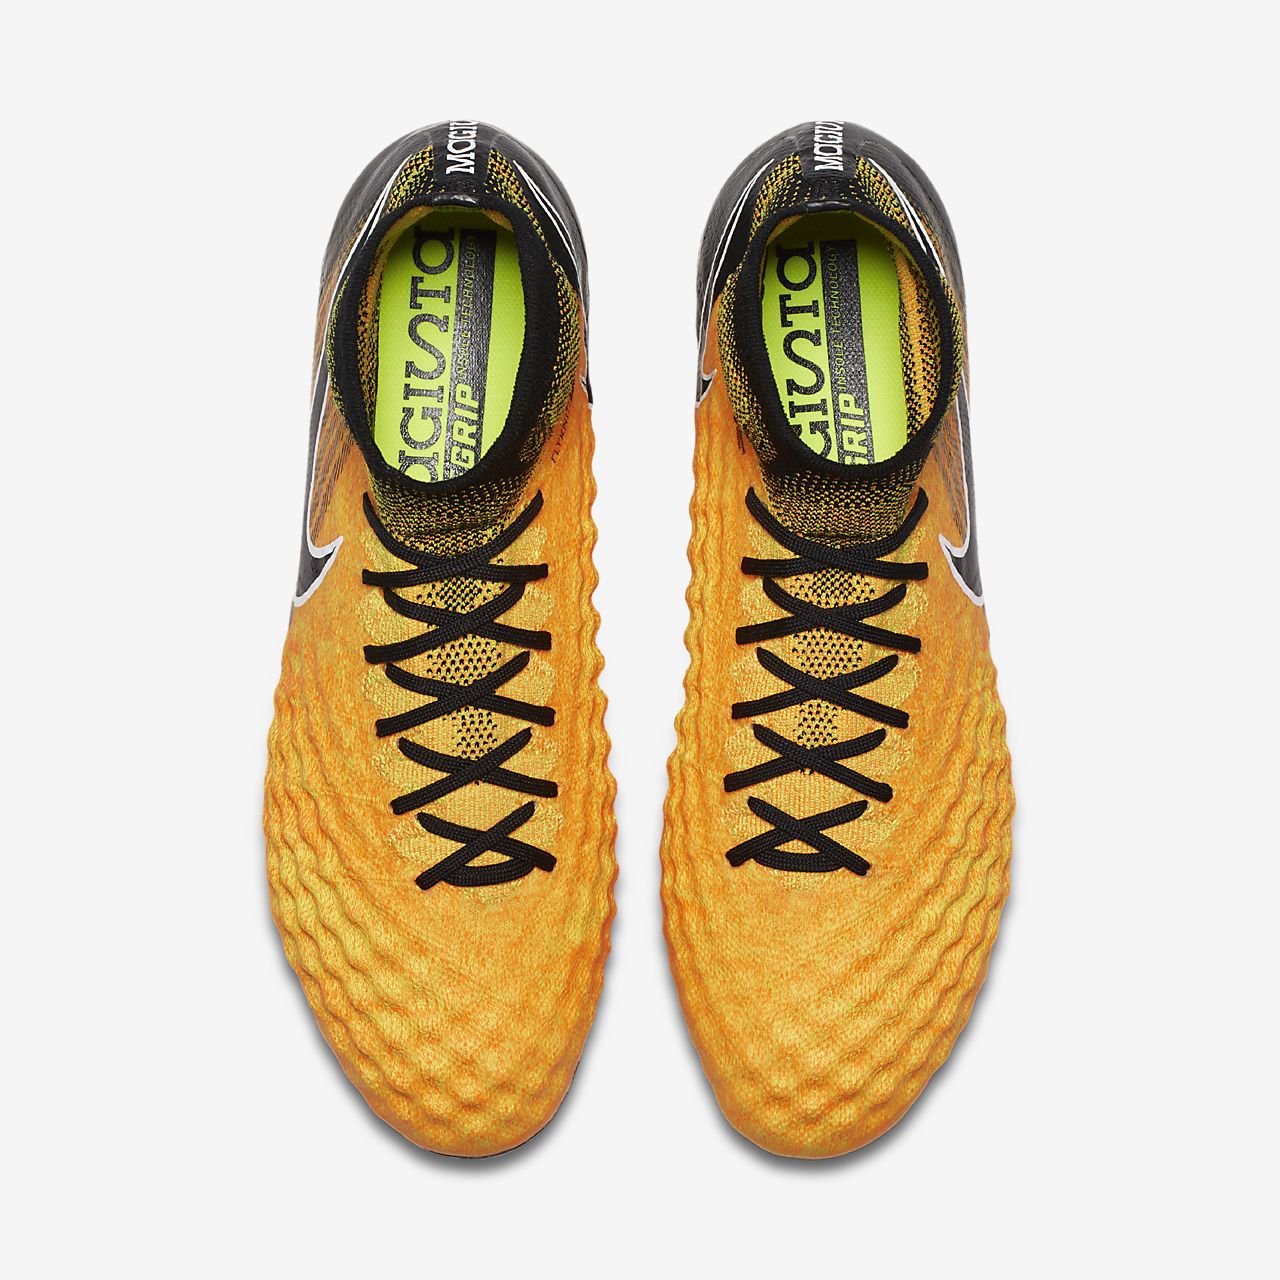 Nike MagistaX Proximo II Air Max 97 Turf Soccer Shoes Nike